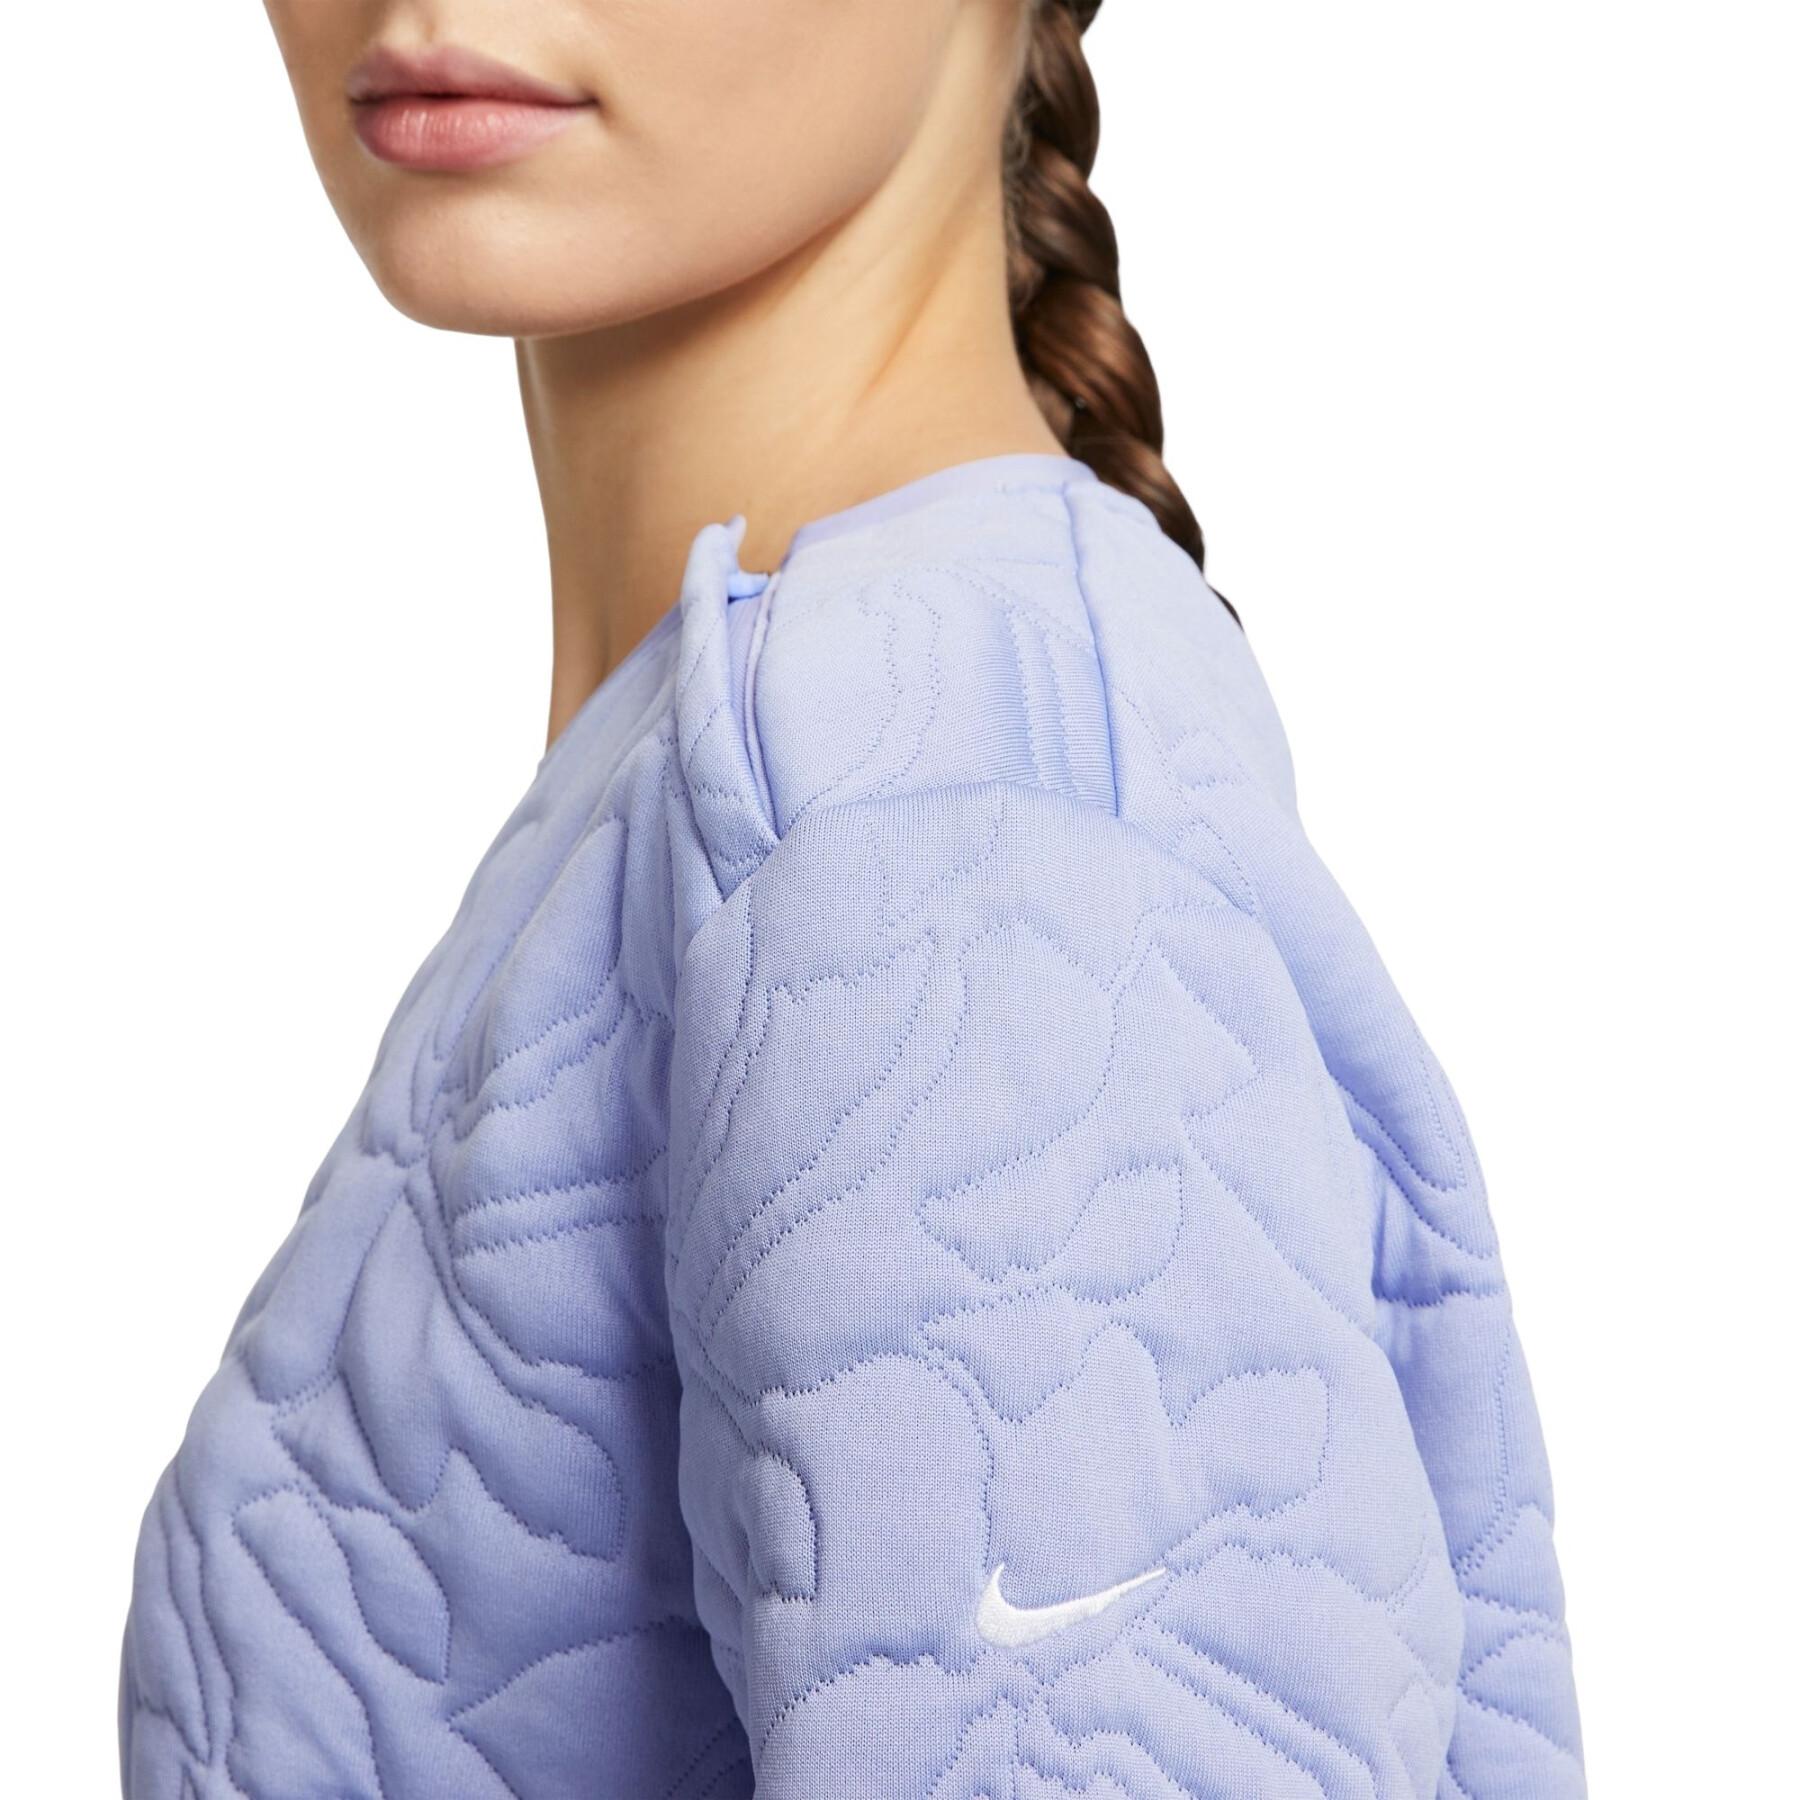 Women's long sleeve mid-layer sweatshirt Nike Dri-Fit